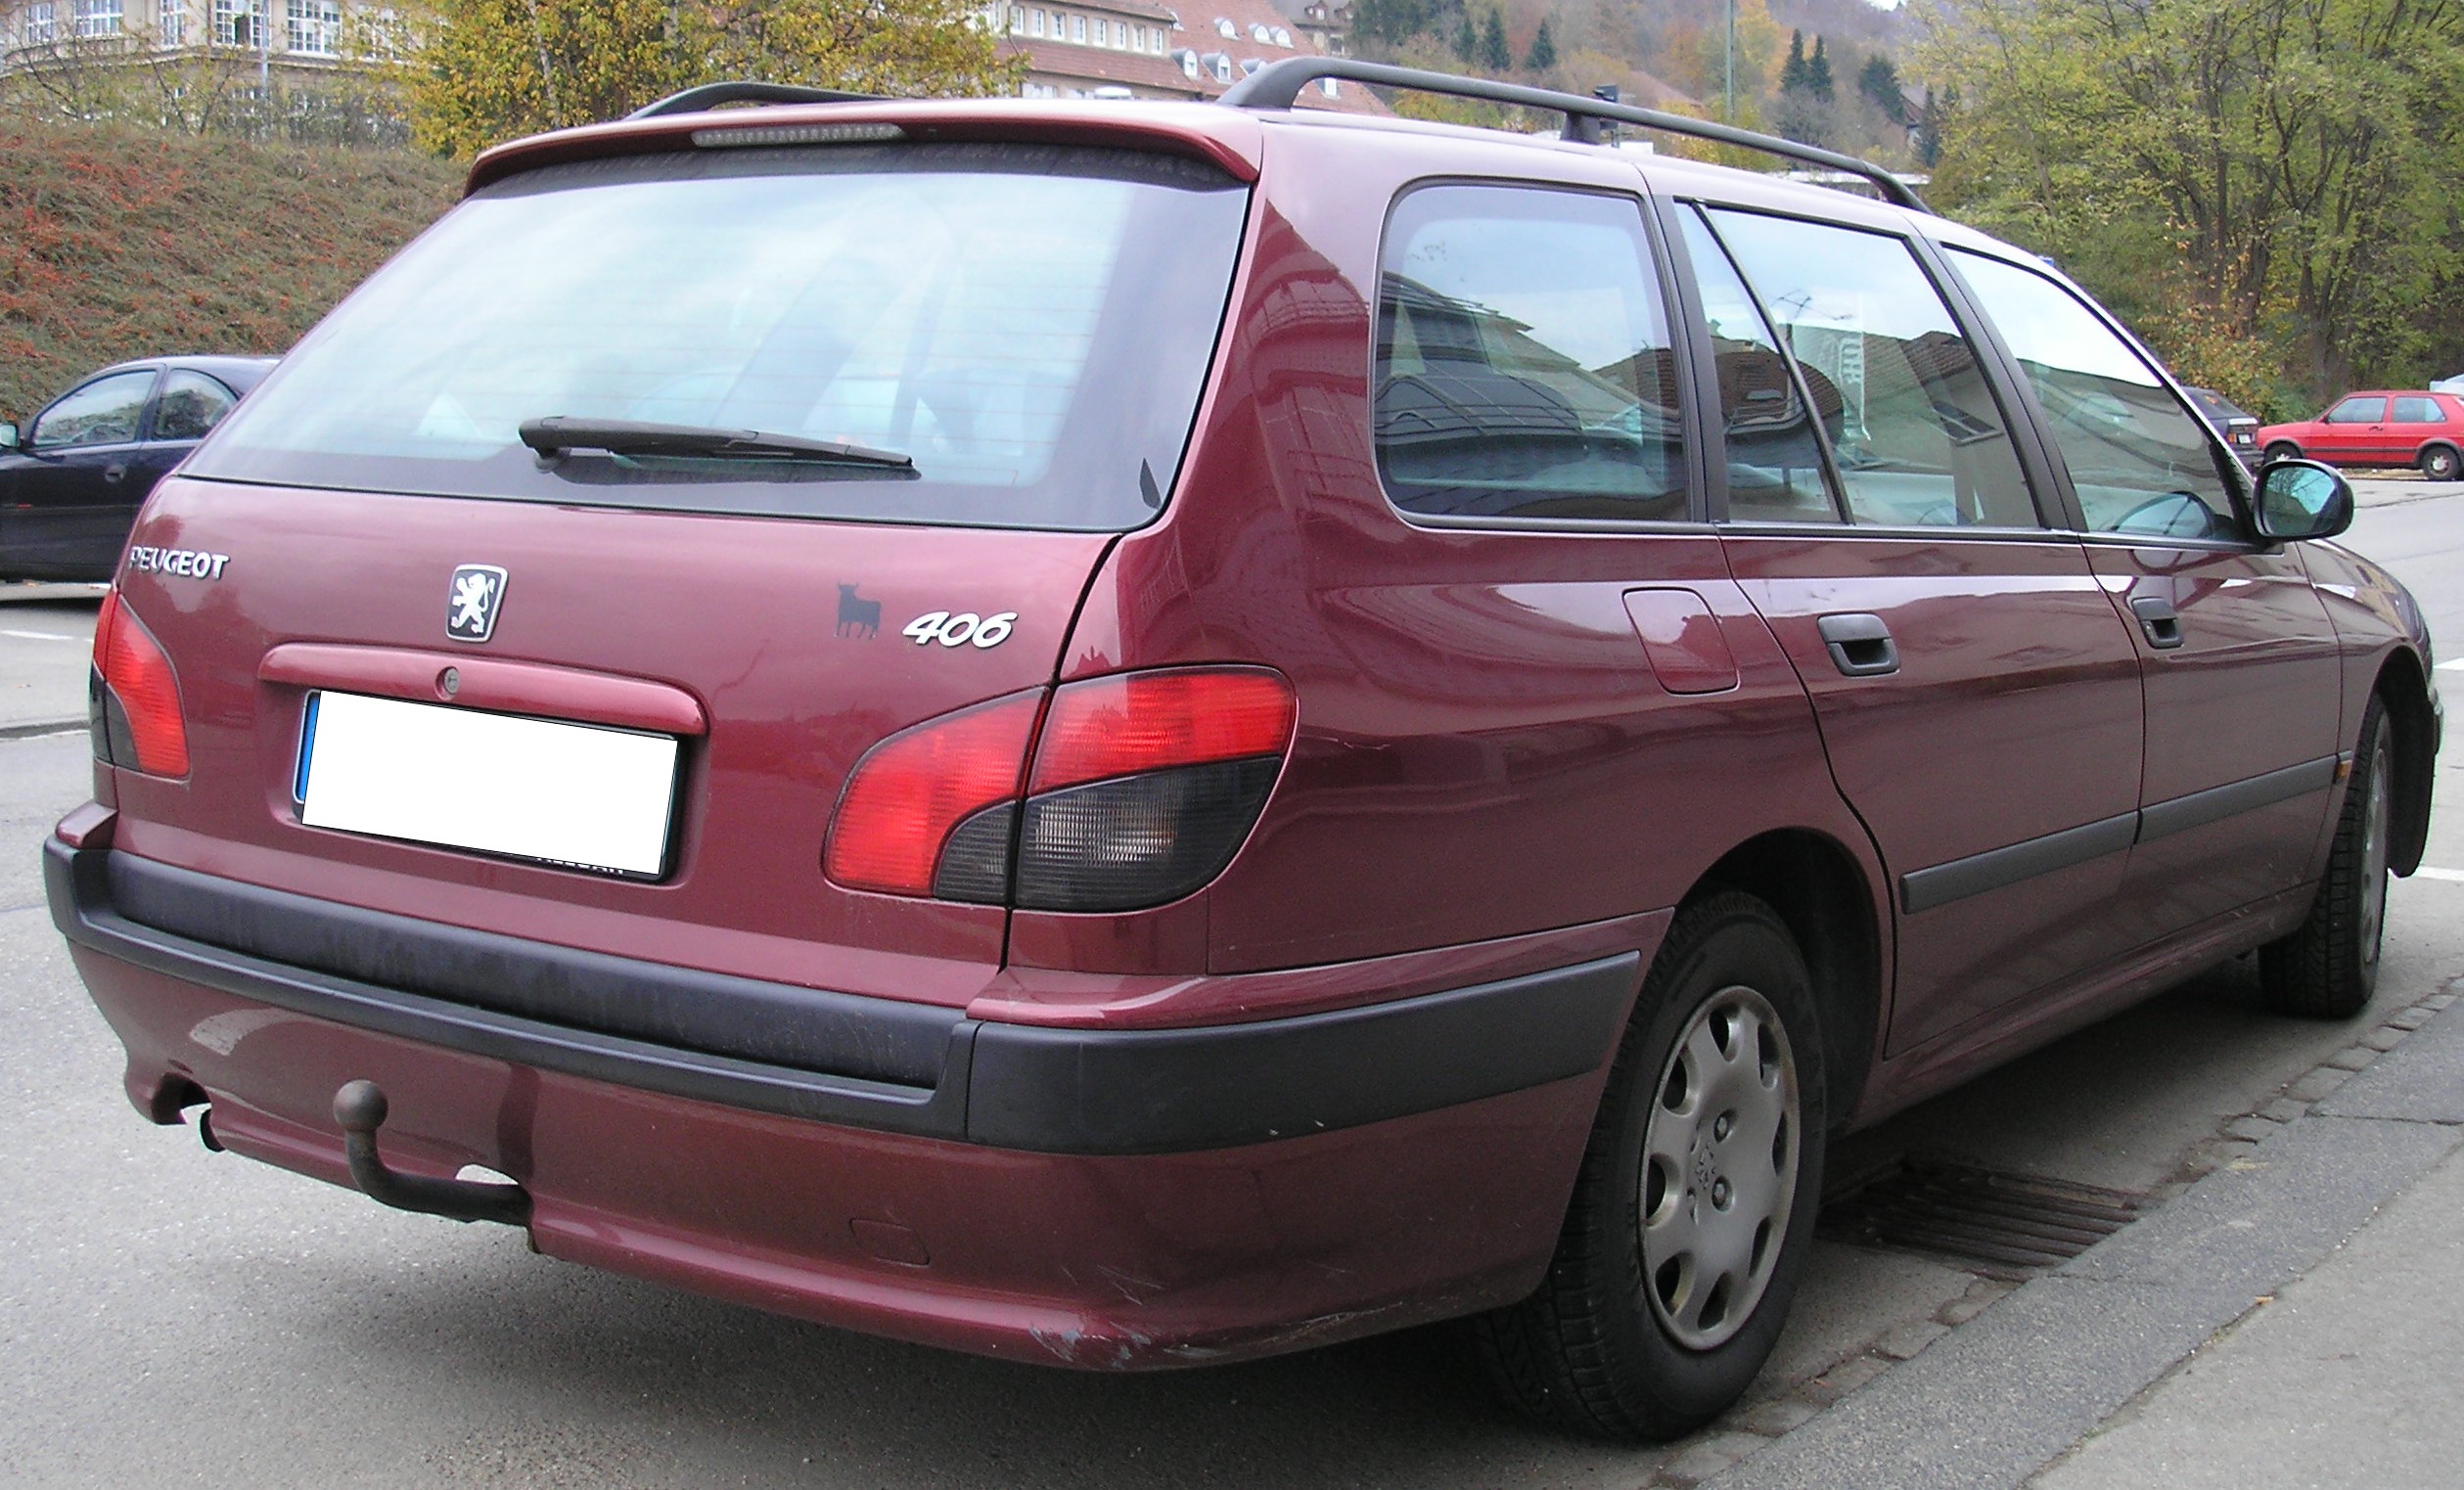 File:2003 Peugeot 406 HDi Coupe SE 2.2 Rear.jpg - Wikipedia